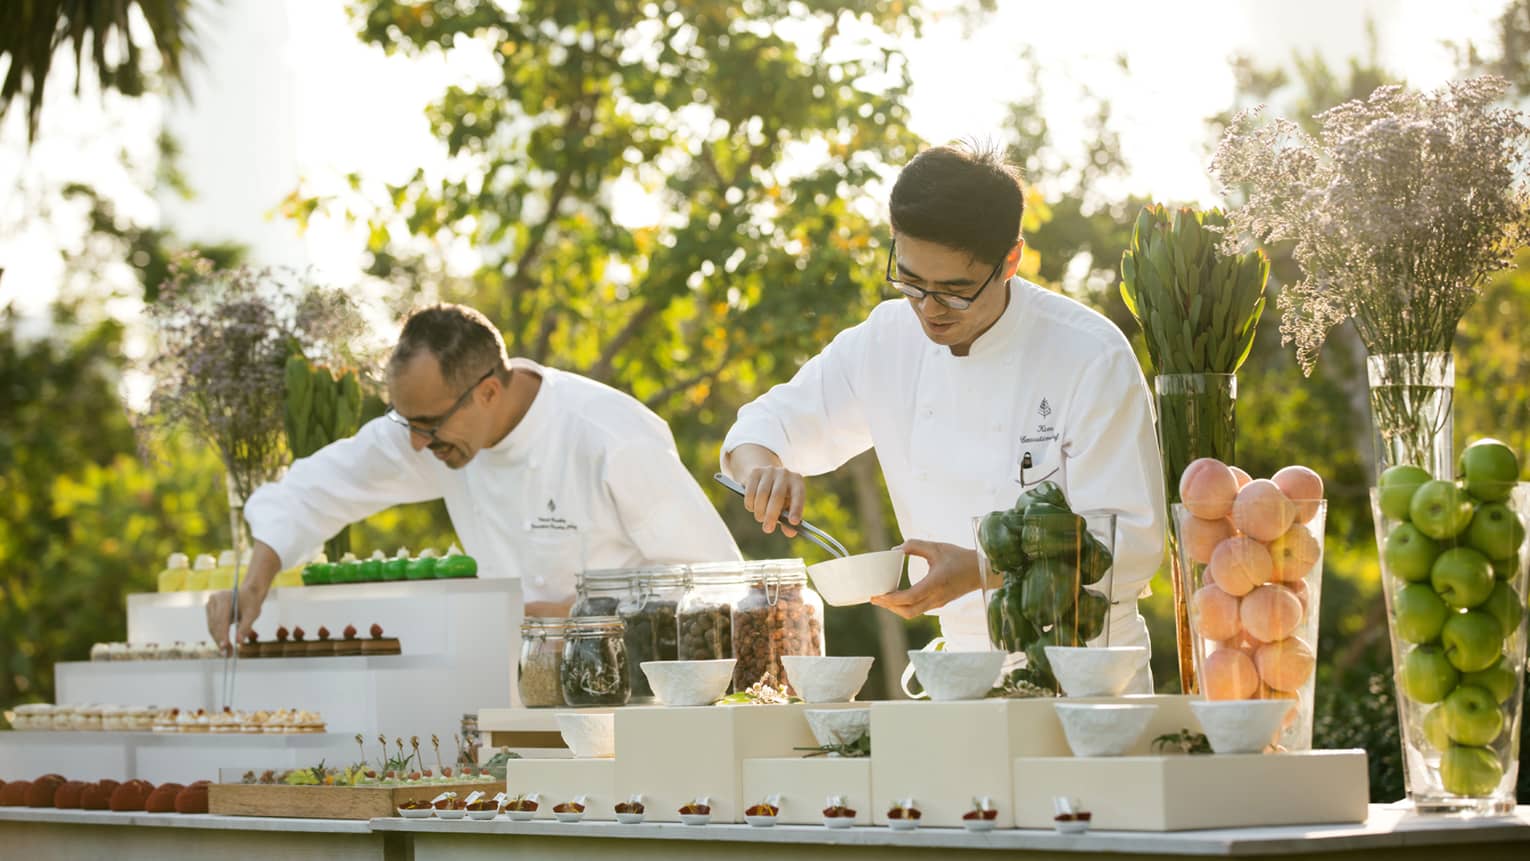 Two chefs arrange desserts on outdoor buffet